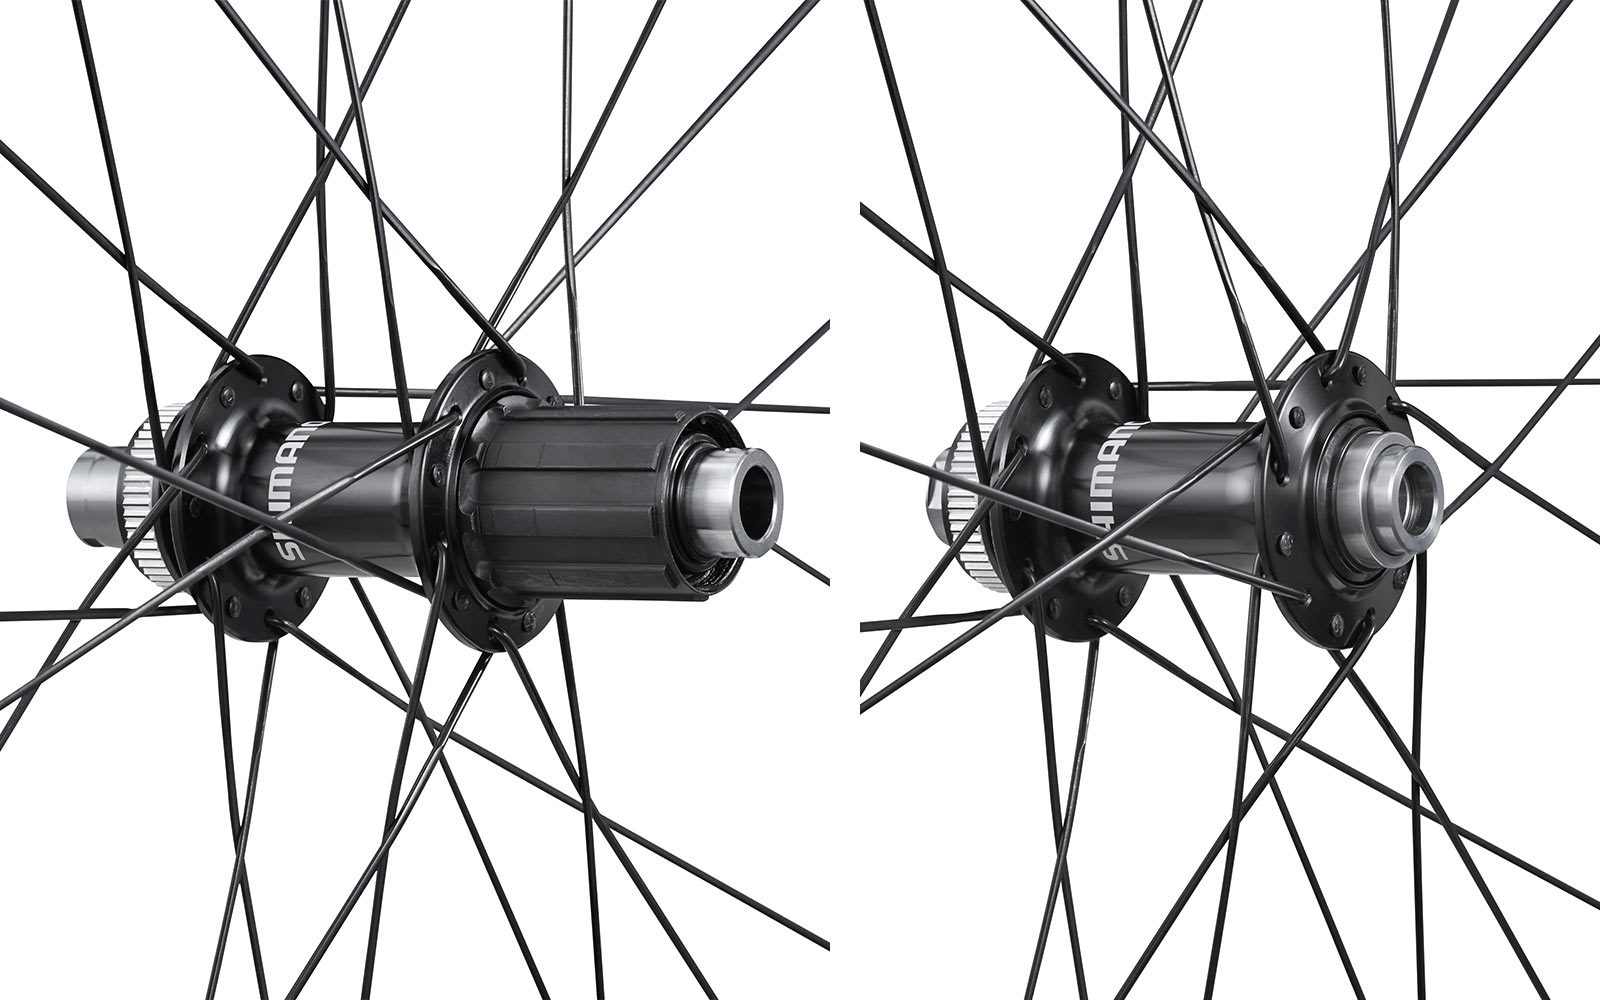 Shimano RS710 C32 C46 affordable tubeless carbon road bike wheels, hub details